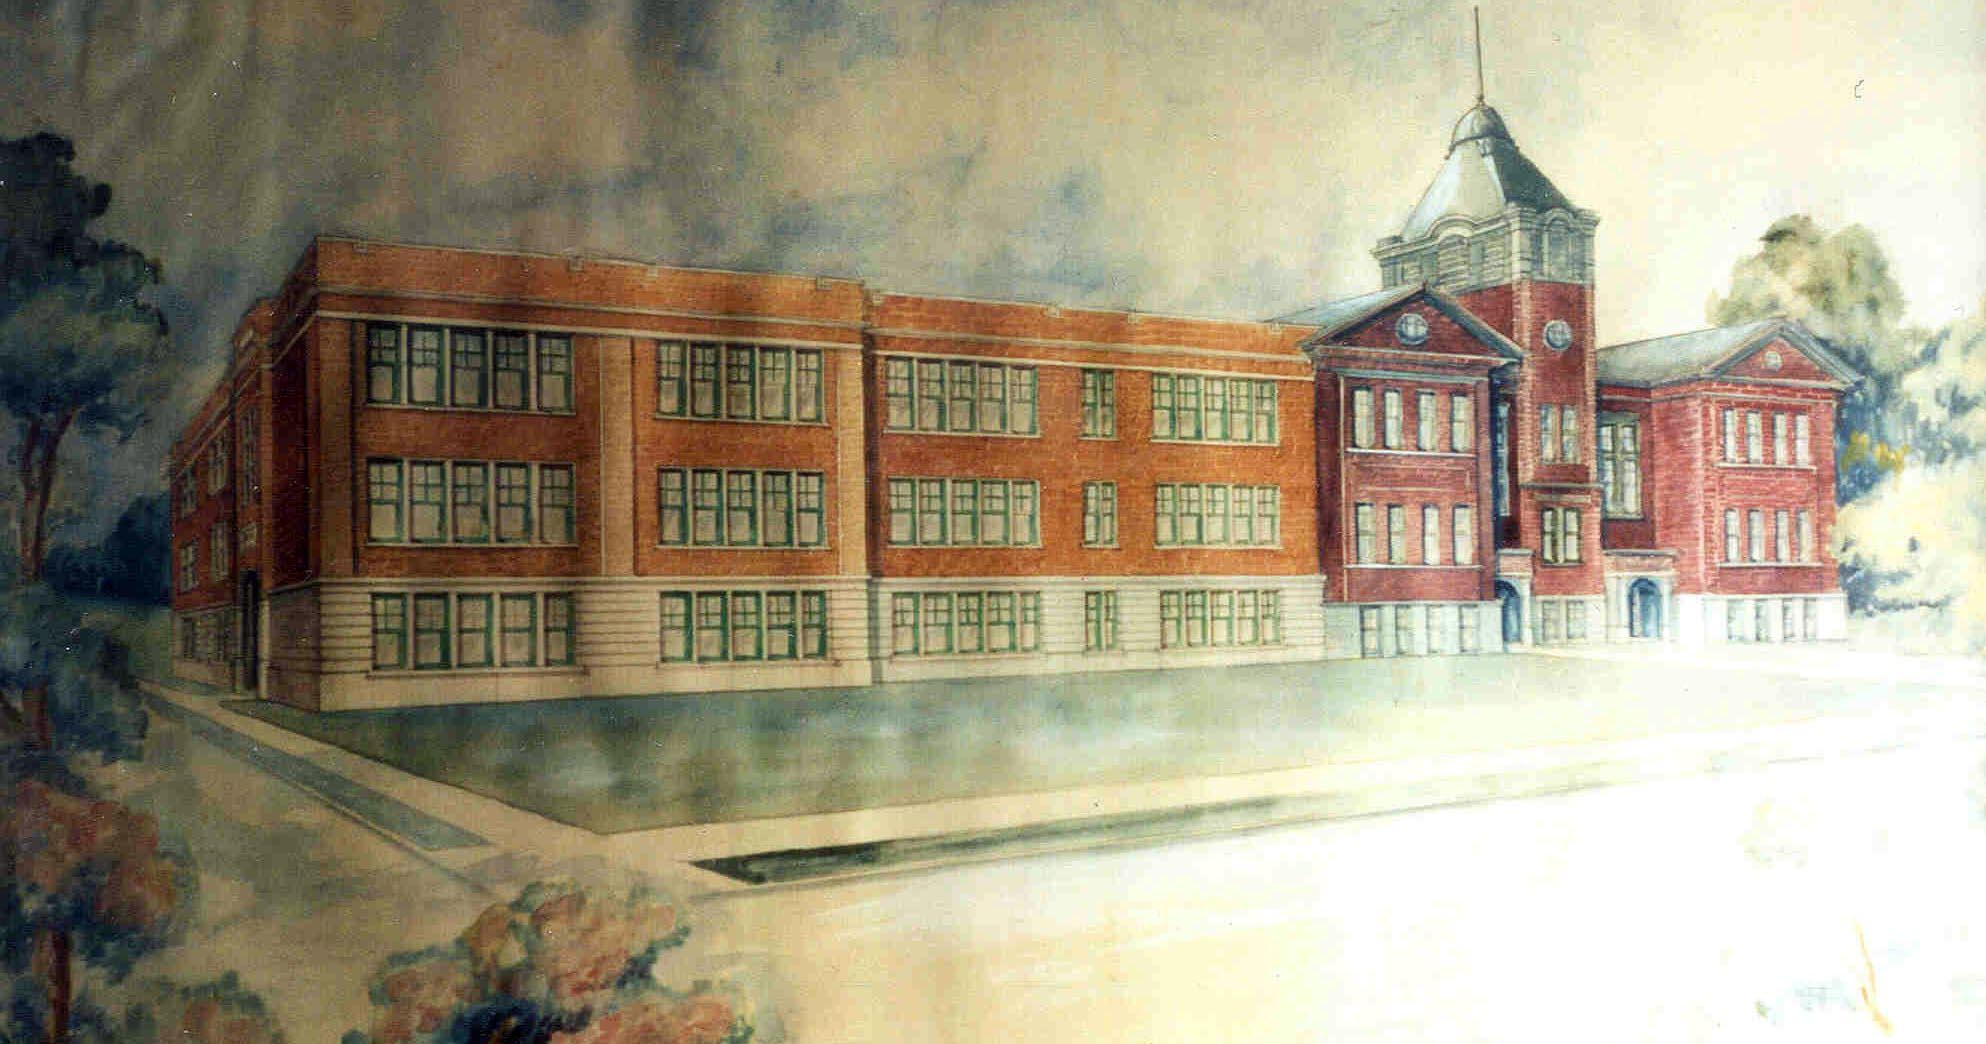 ALBION HIGH SCHOOL CLASS OF 1922